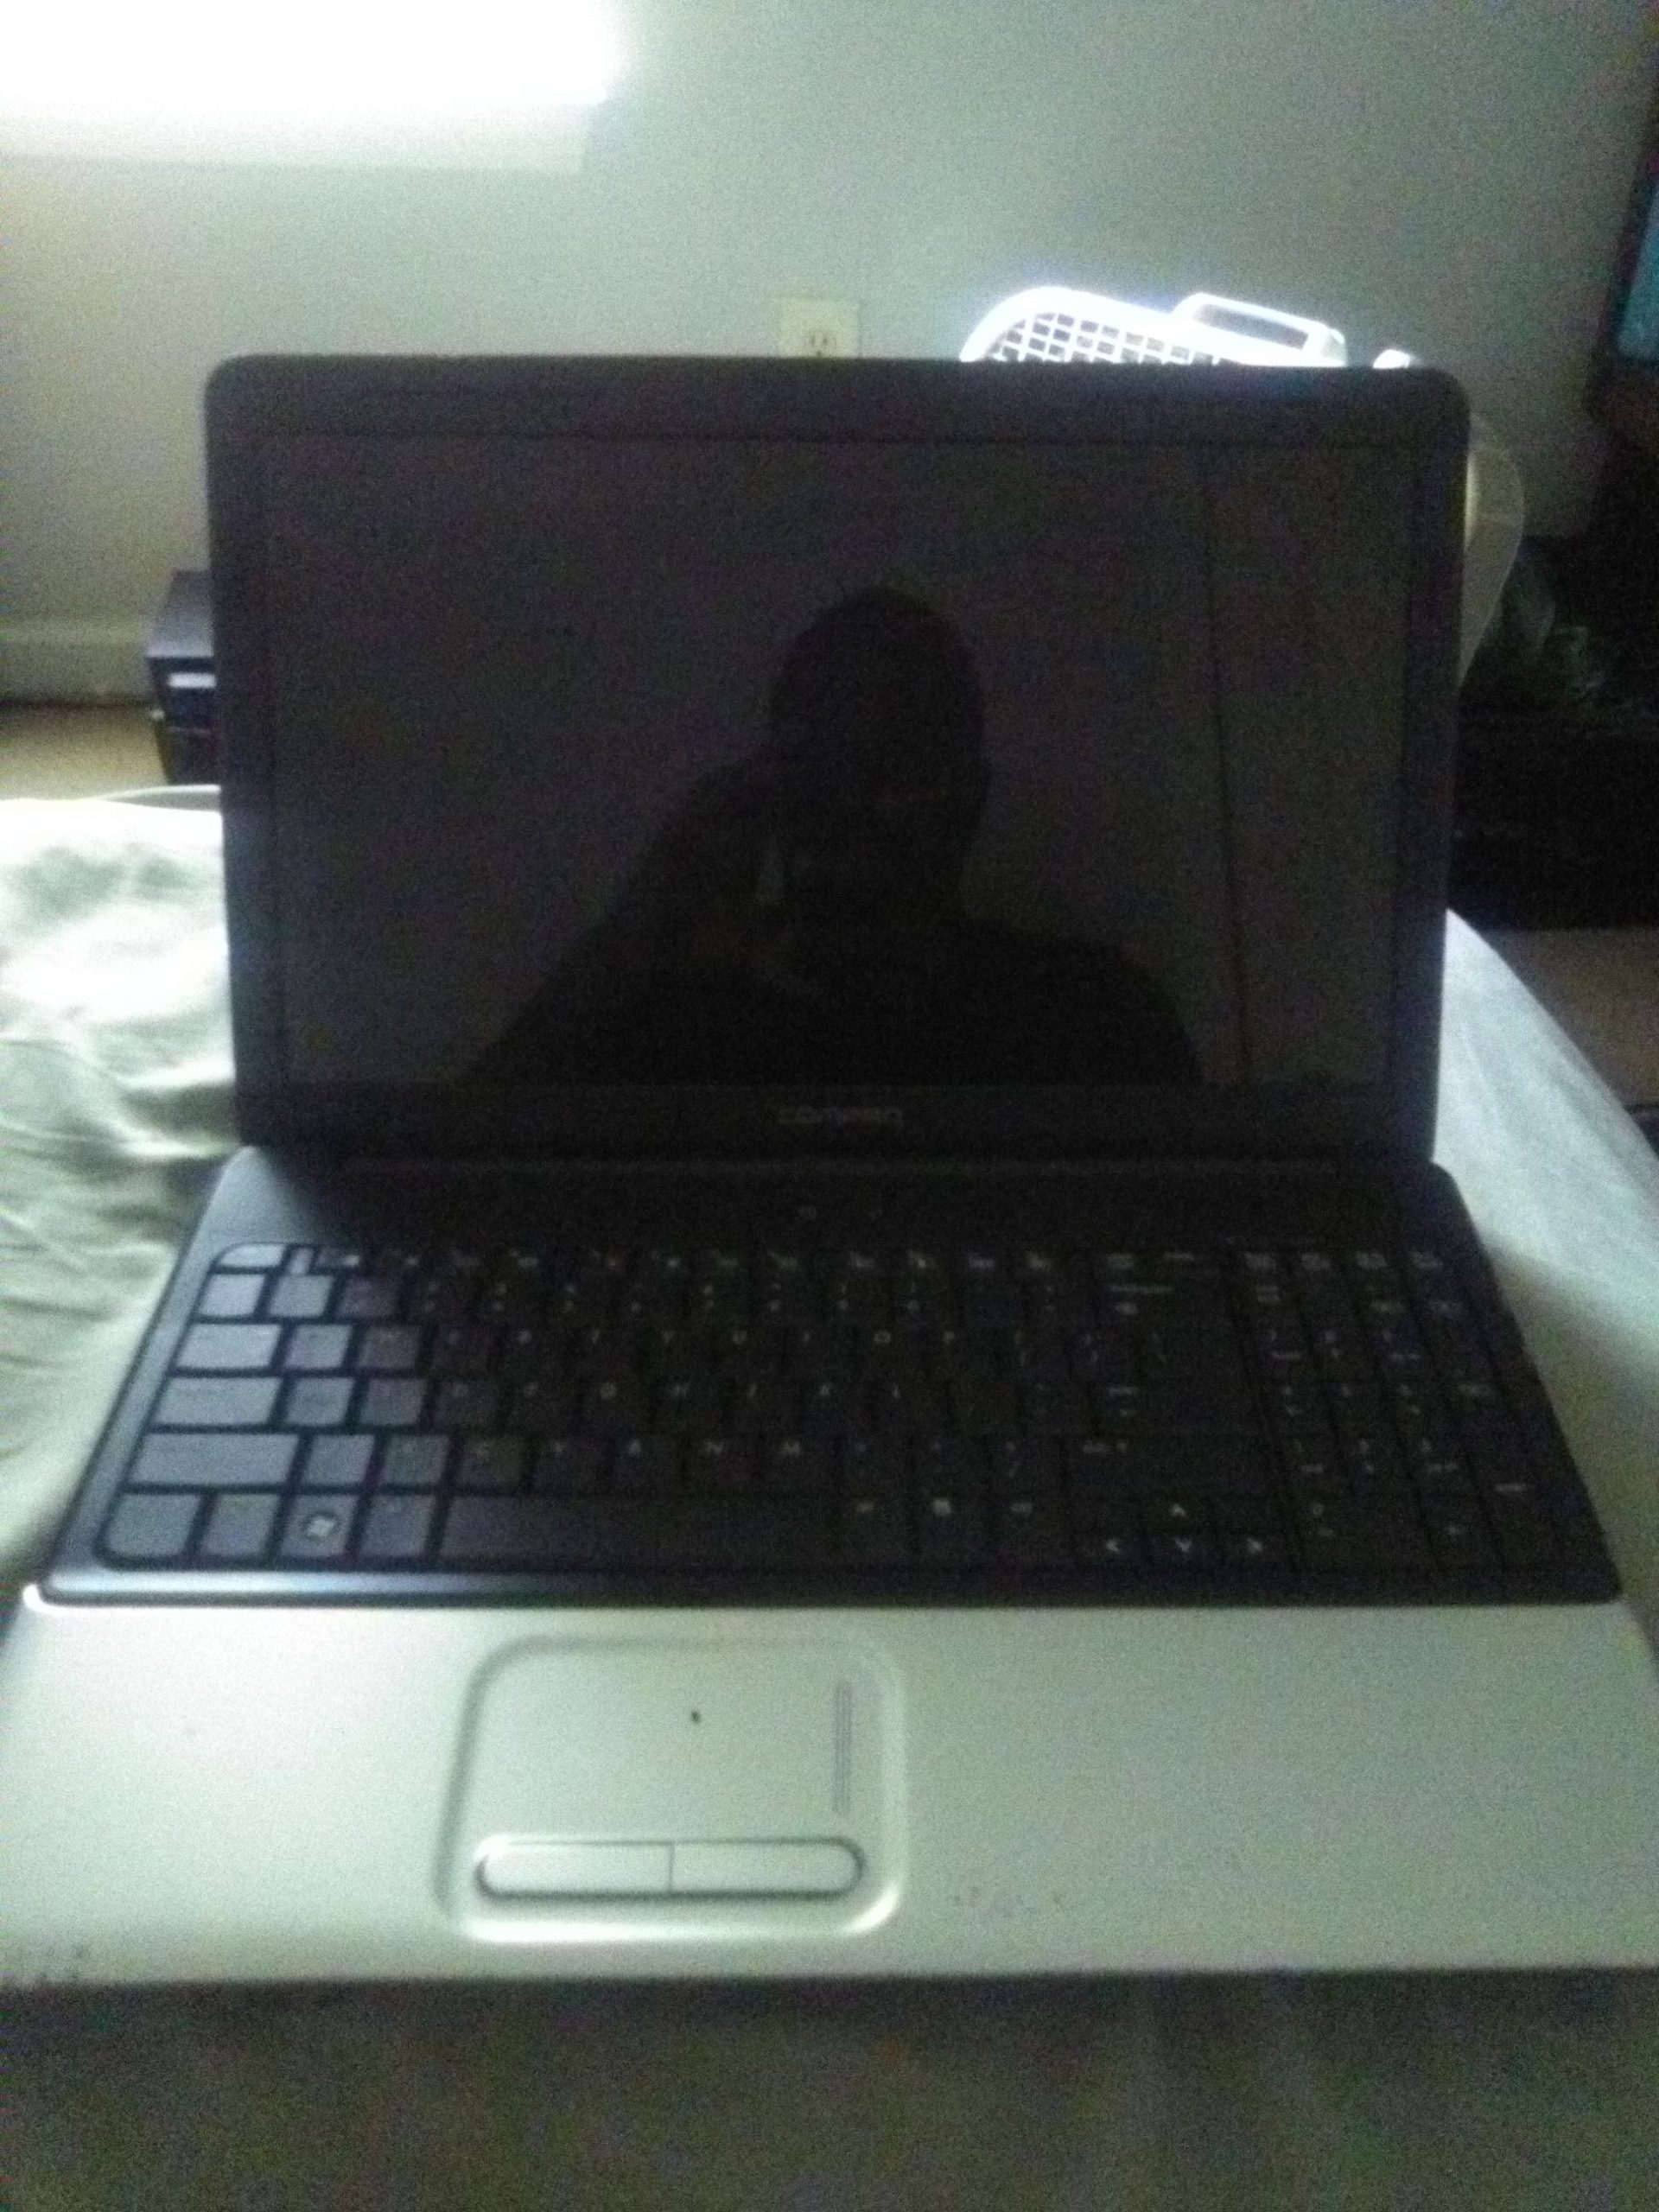 HP Compaq Presario CQ60 Laptop